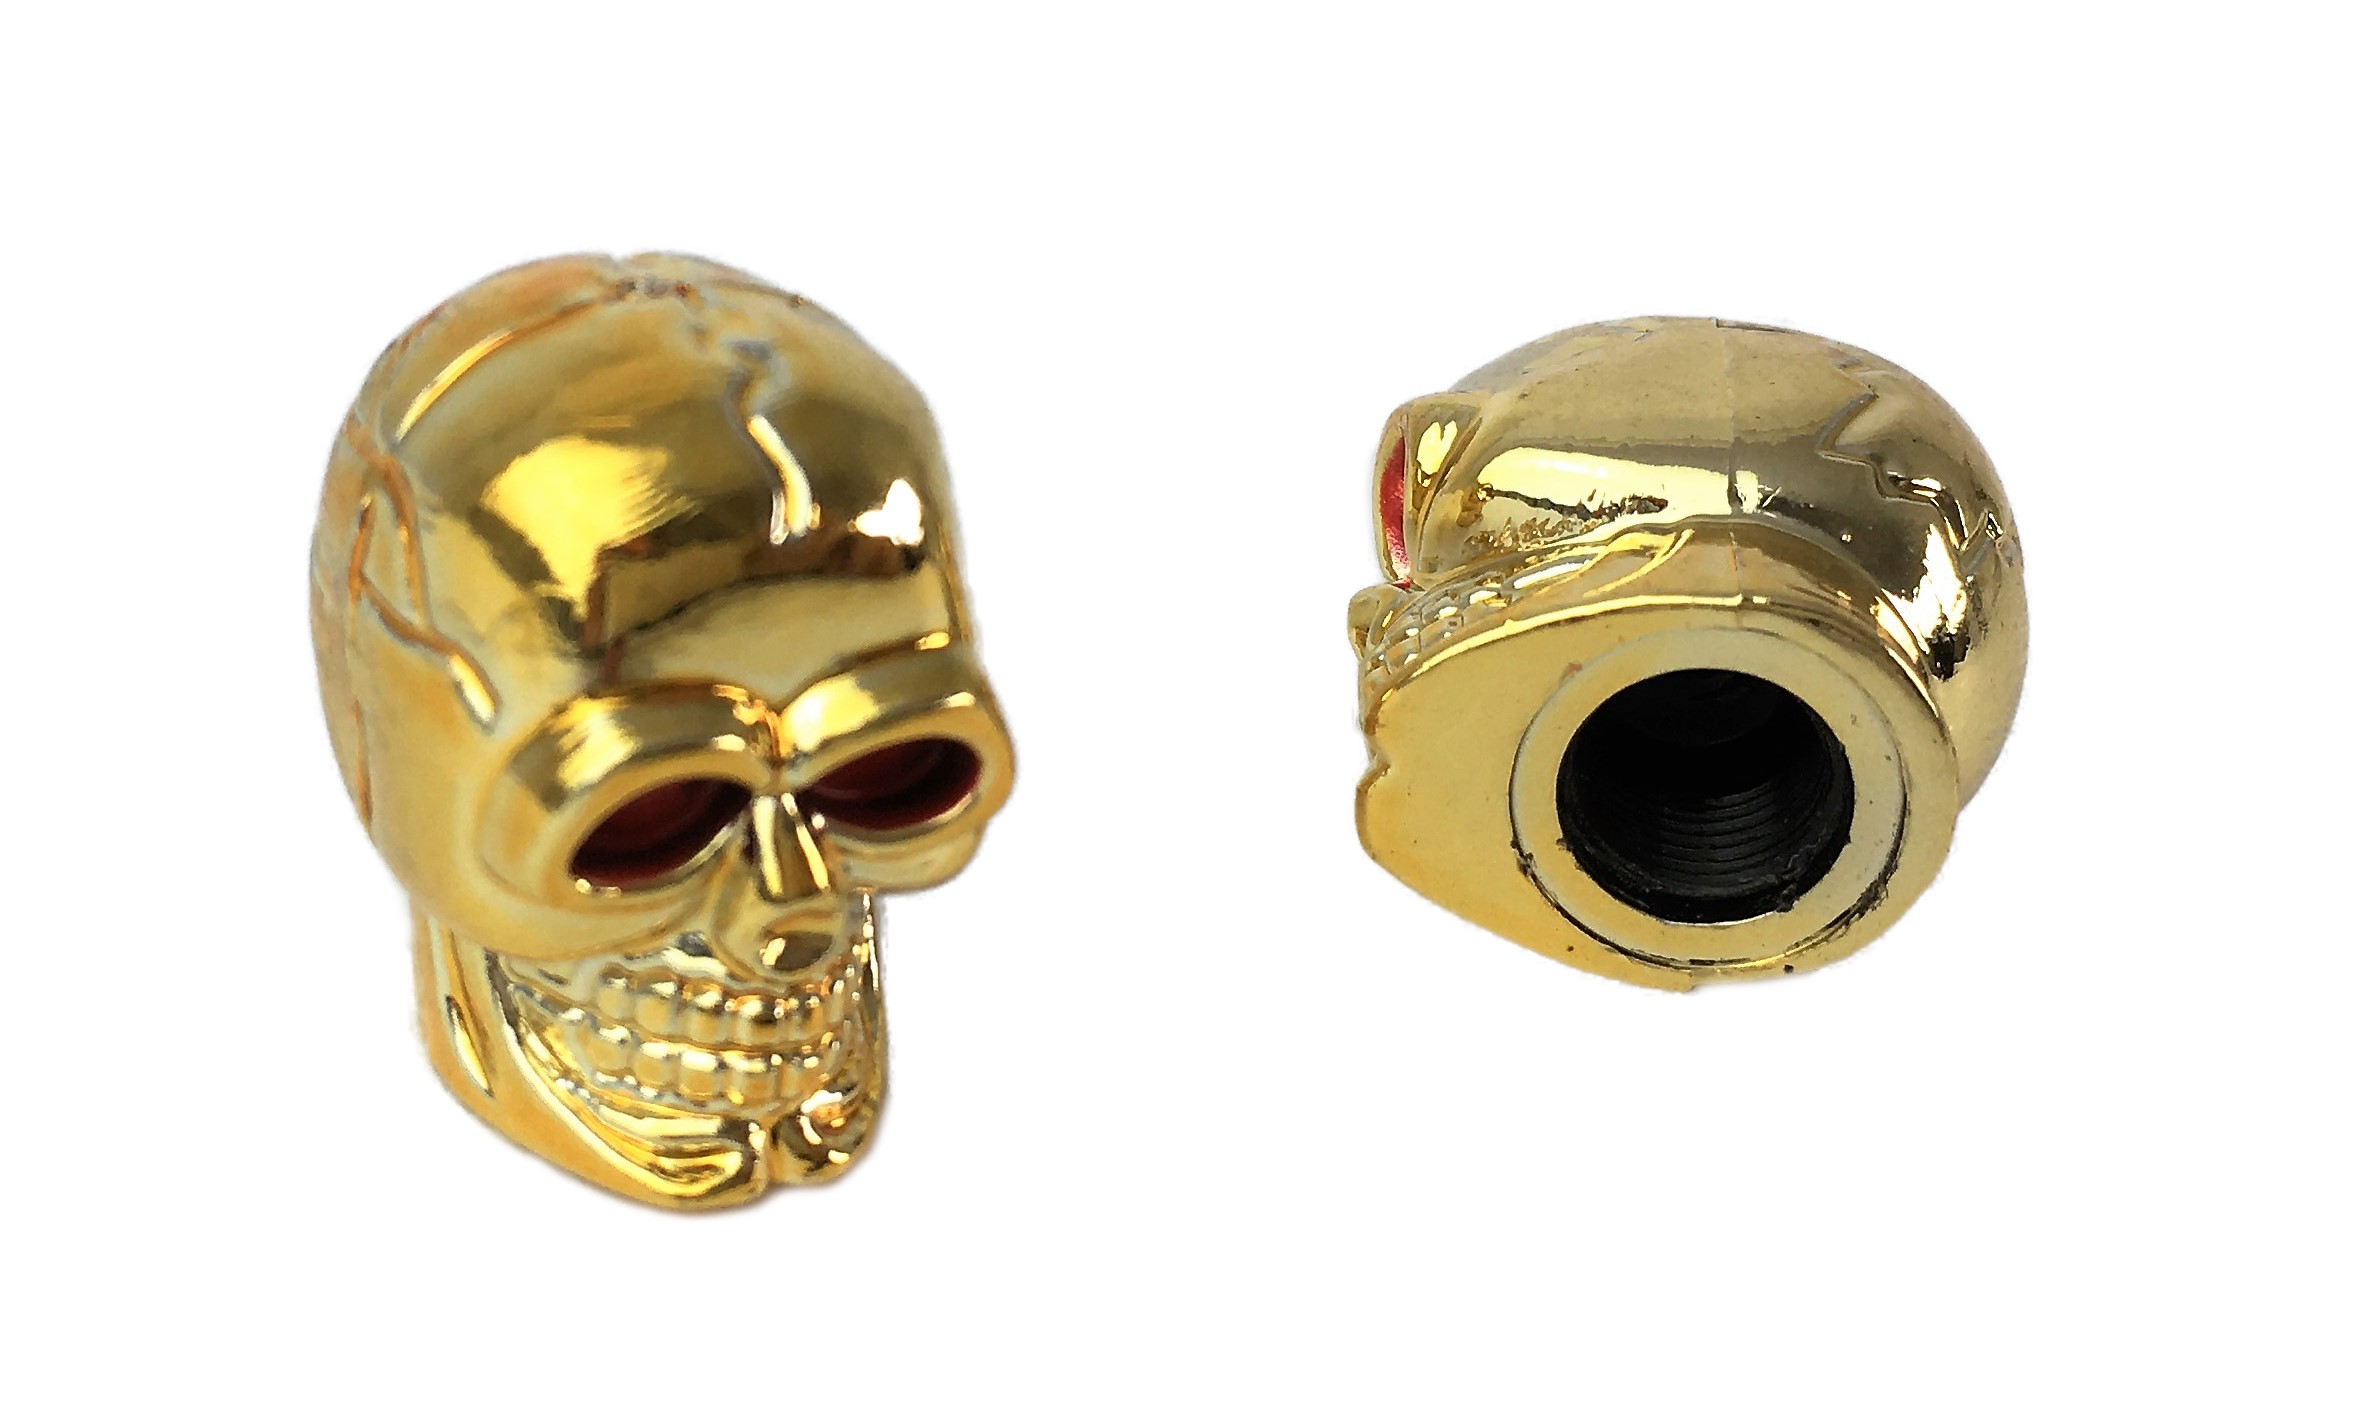 Valve Caps Skull / Deadhead, golden